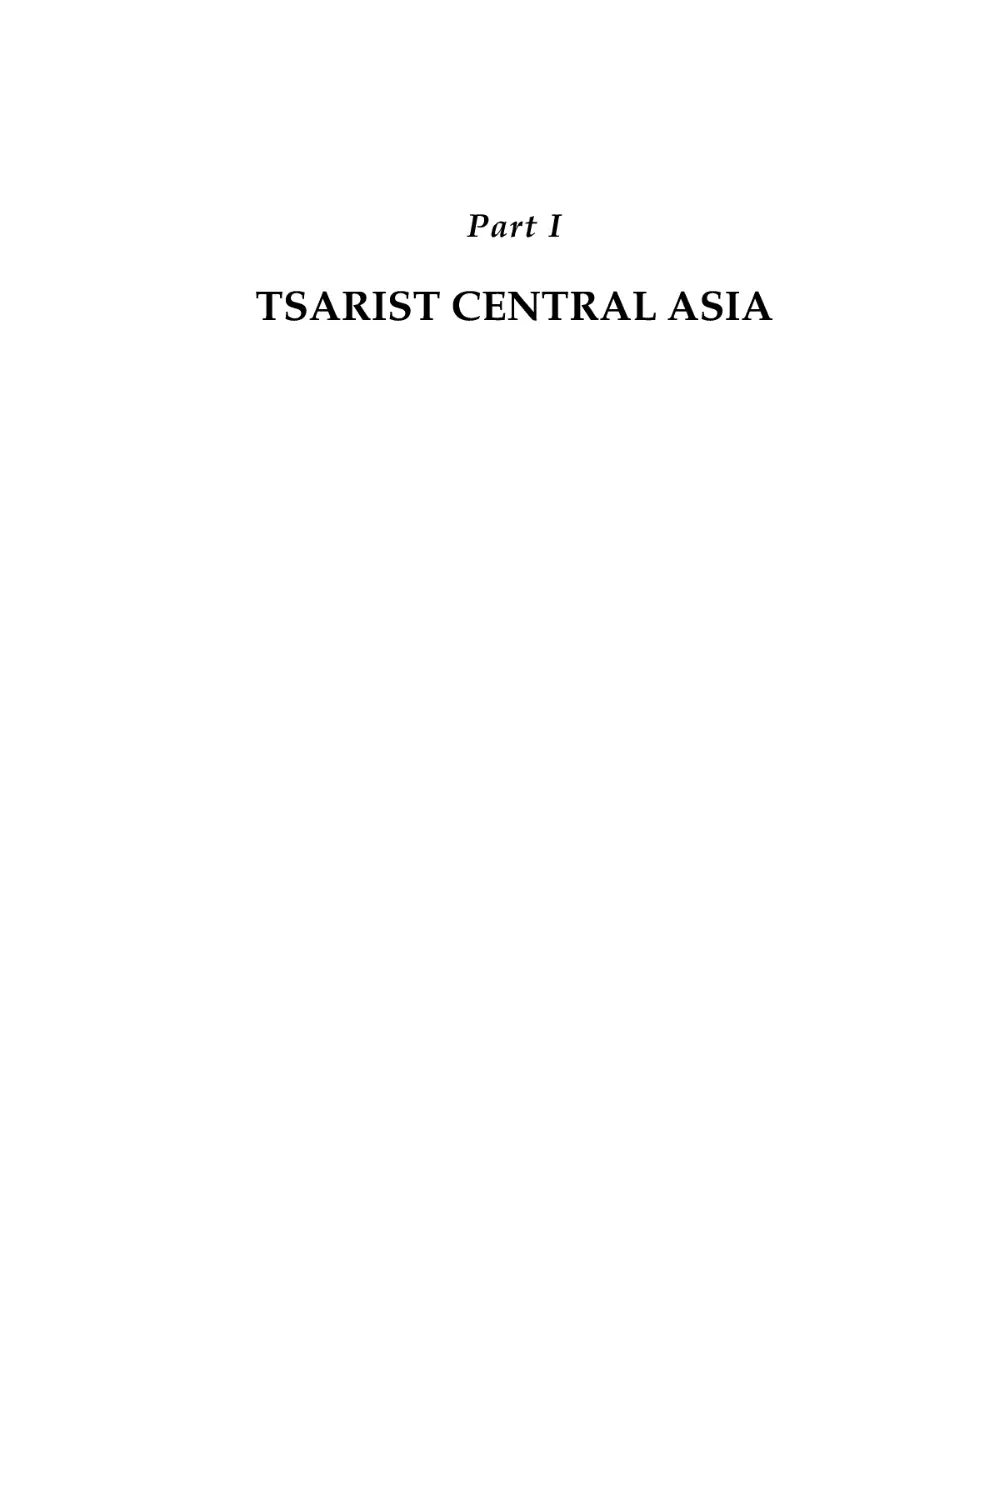 Part I. Tsarist Central Asia